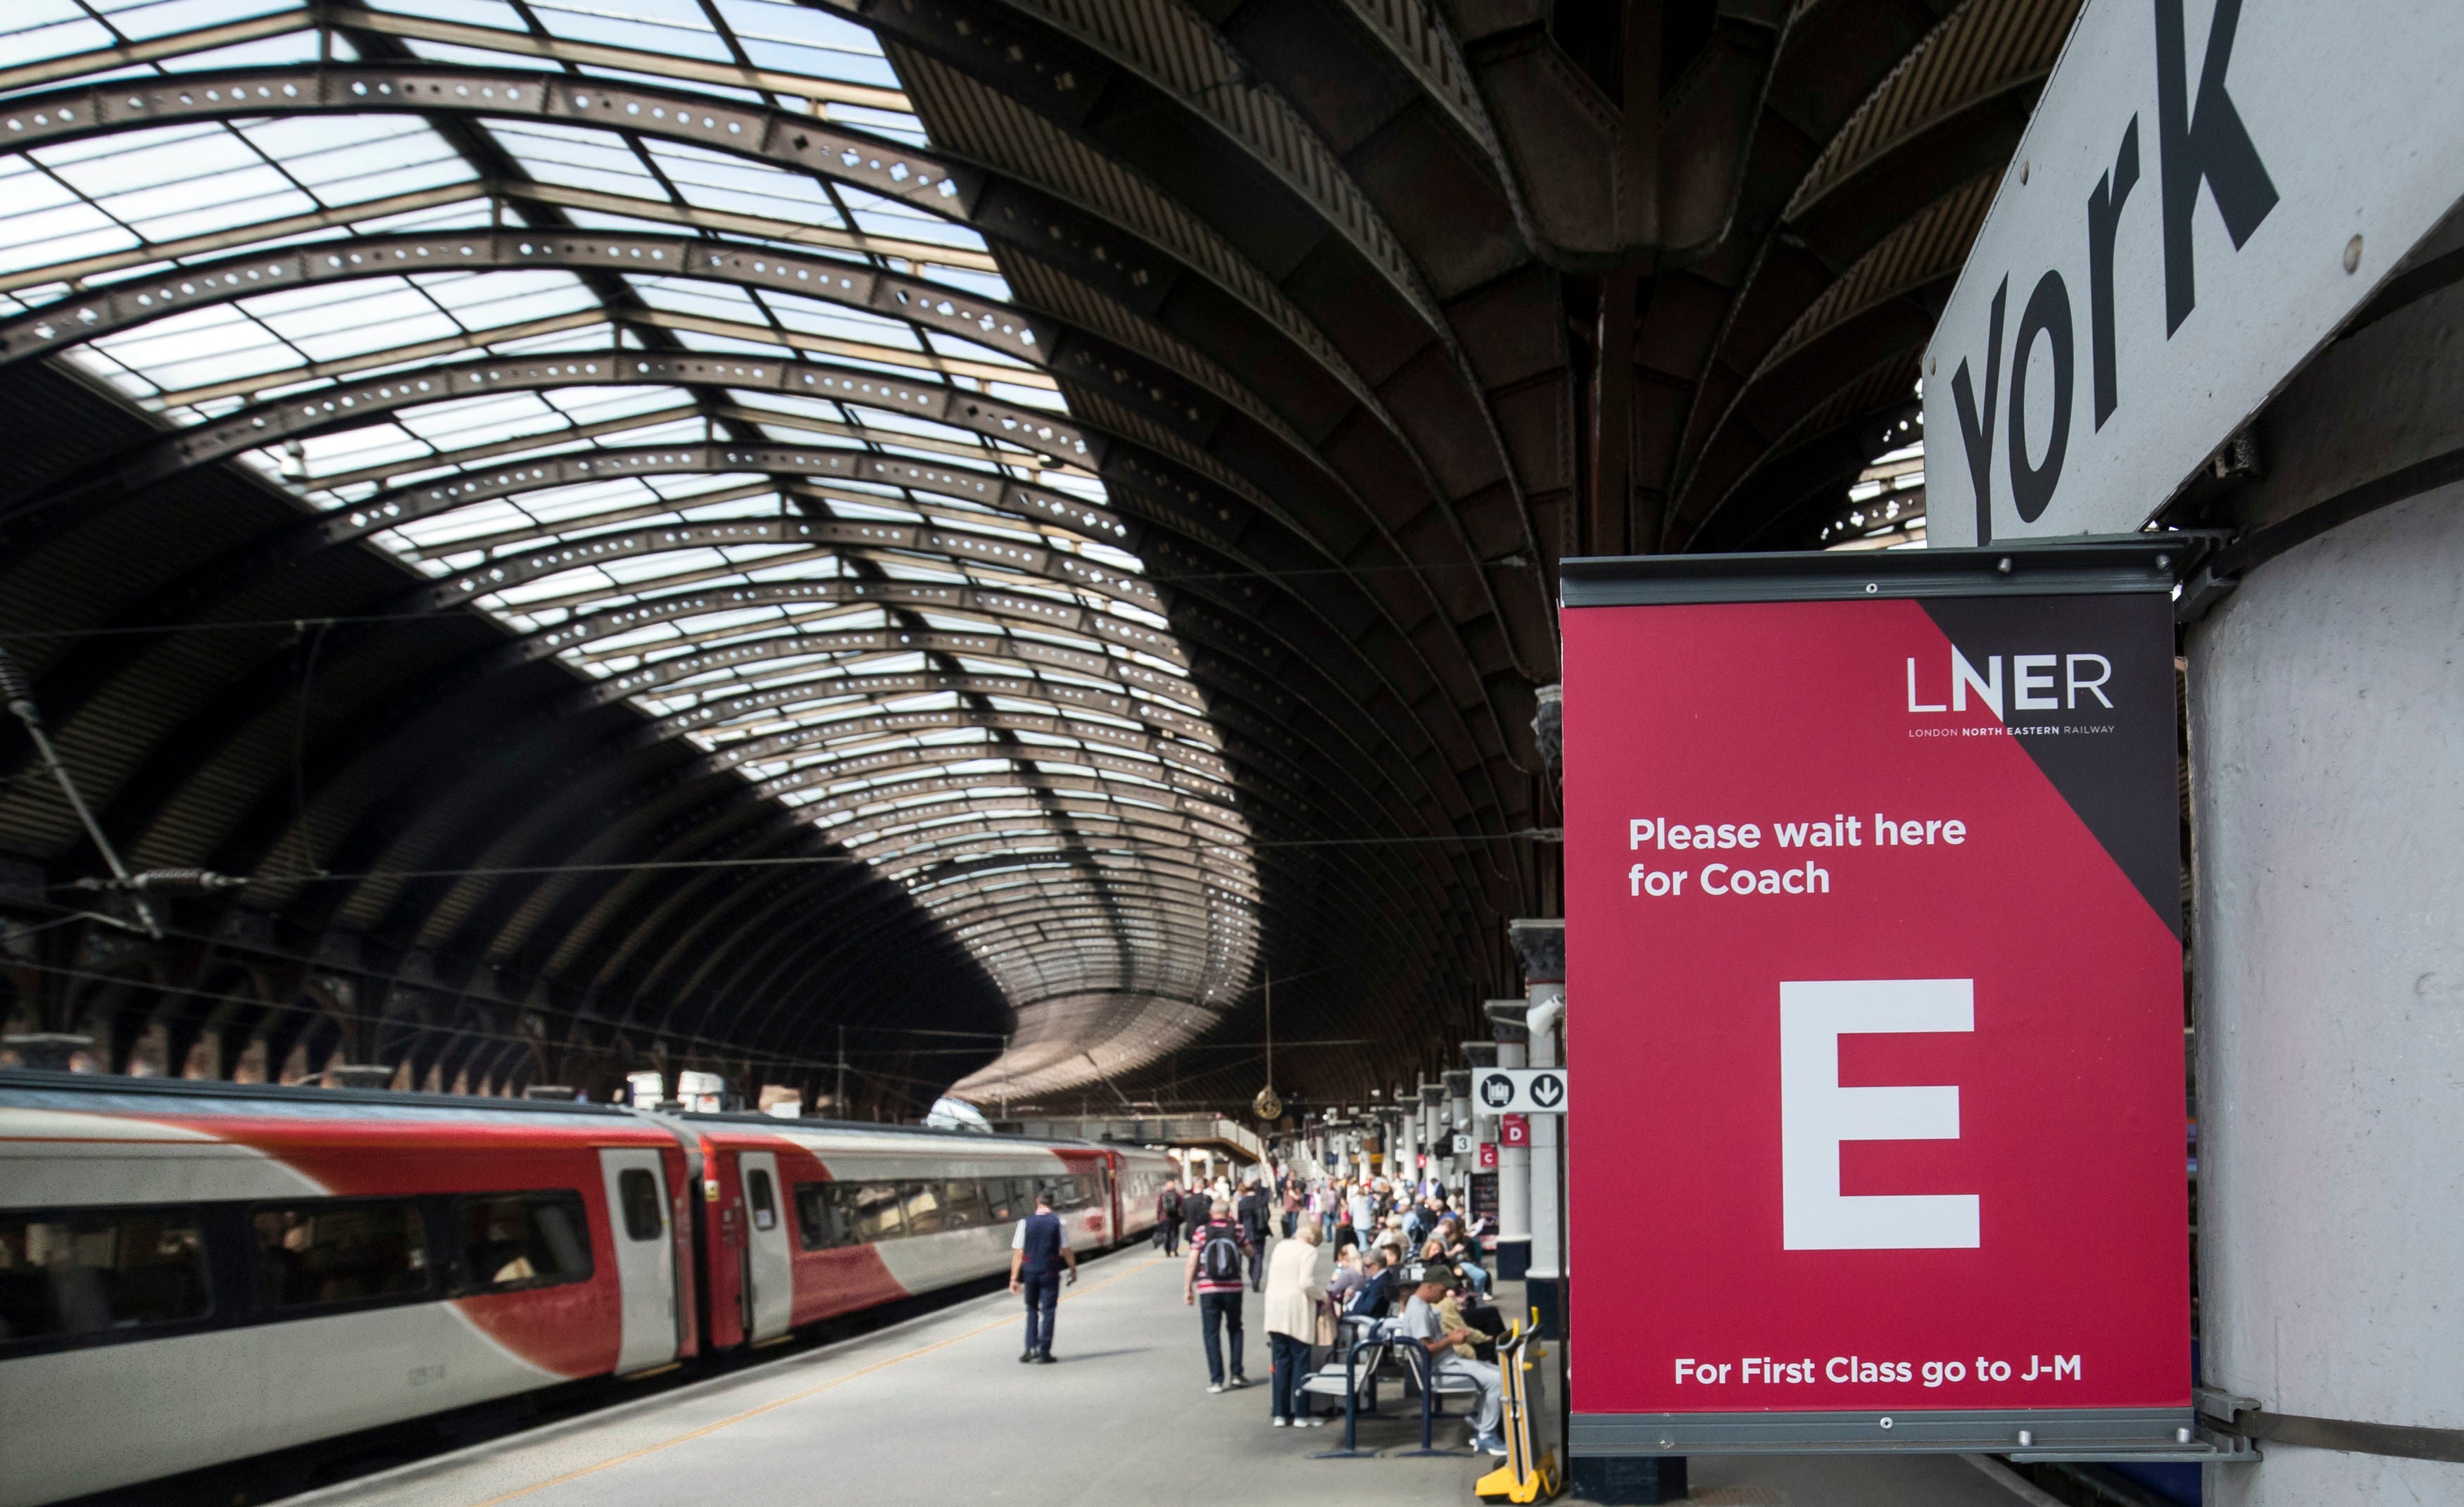 A LNER (London North Eastern Railway) sign at York railway station (Danny Lawson/PA)